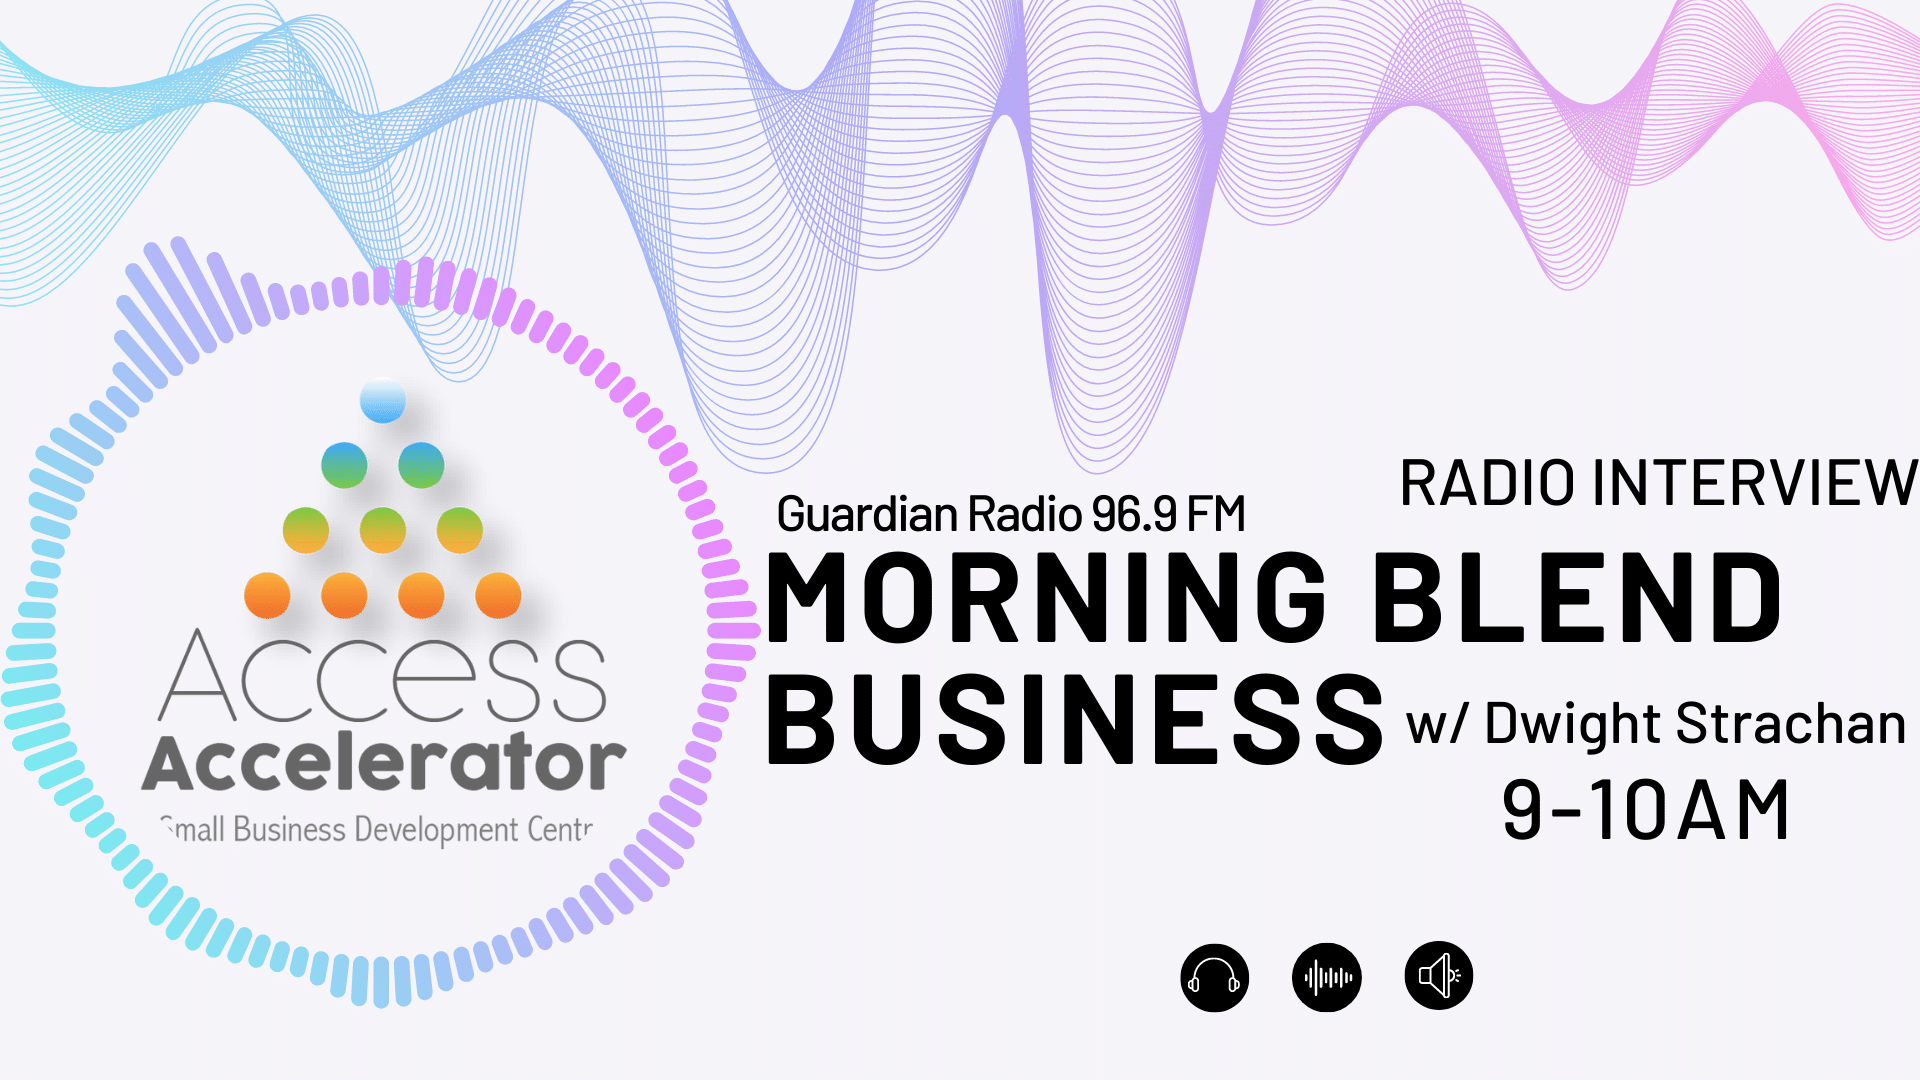 Morning Blend Business on Guardian Radio 96.9FM flier